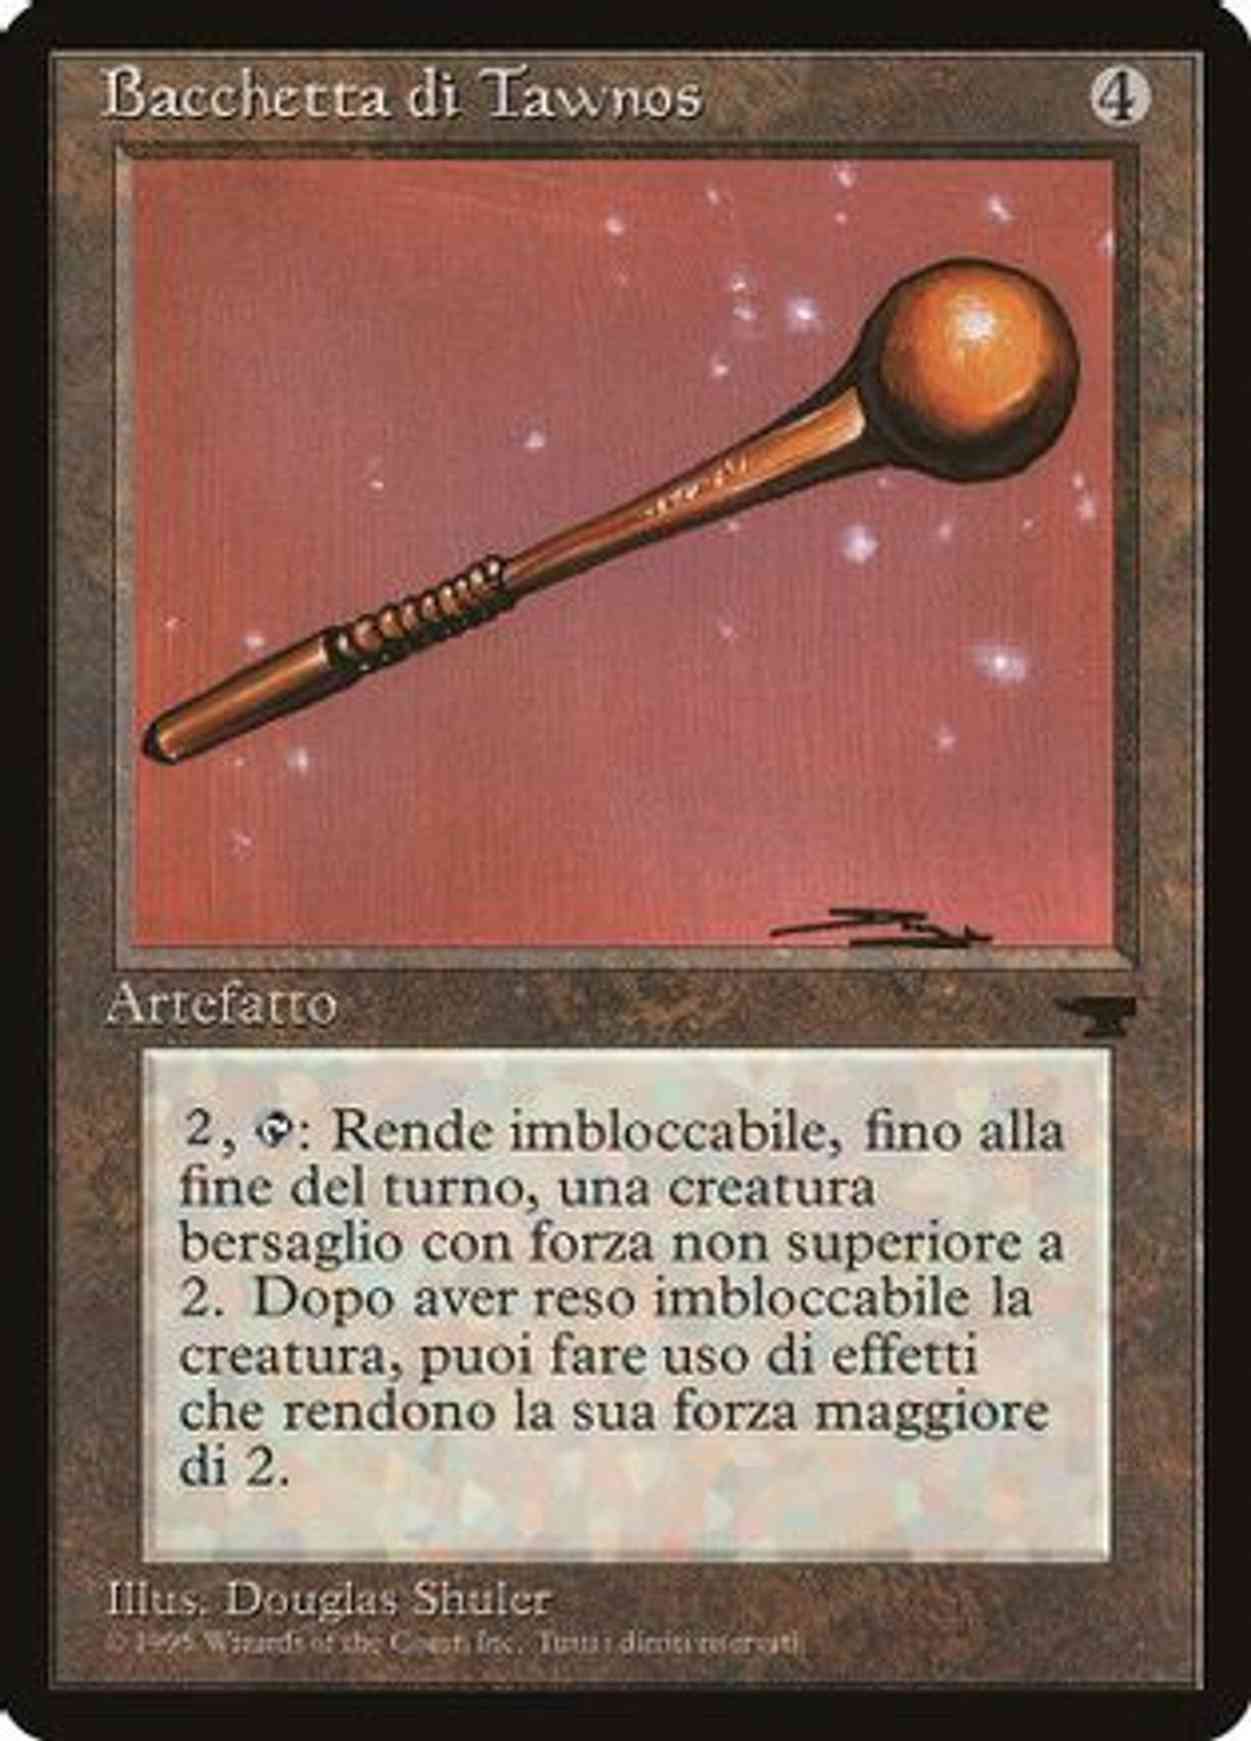 Tawnos's Wand (Italian) - "Bacchetta di Tawnos" magic card front